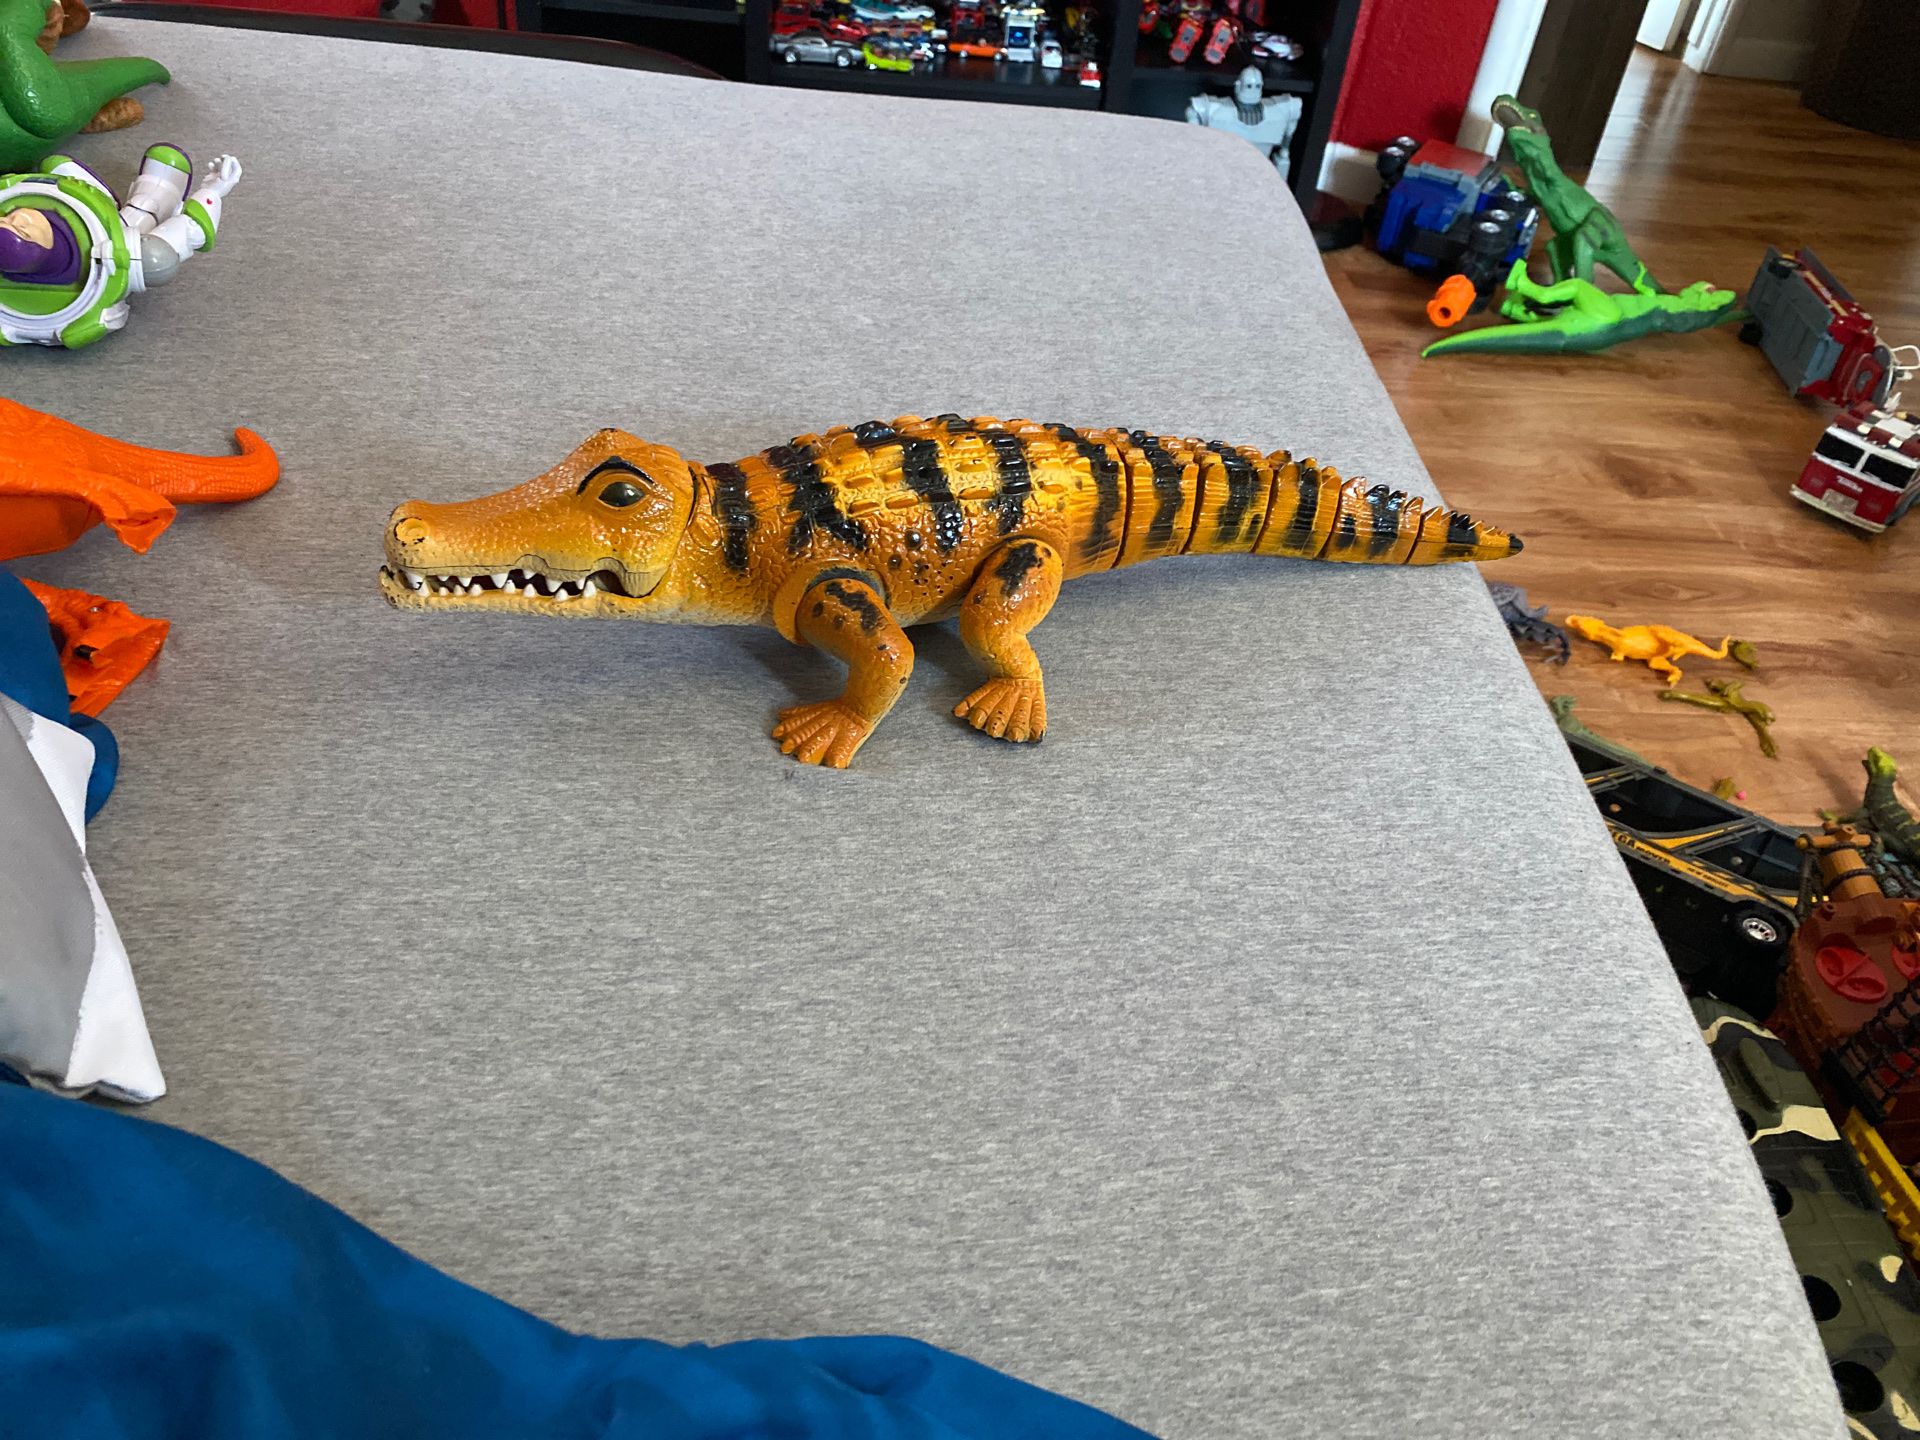 Toy alligator